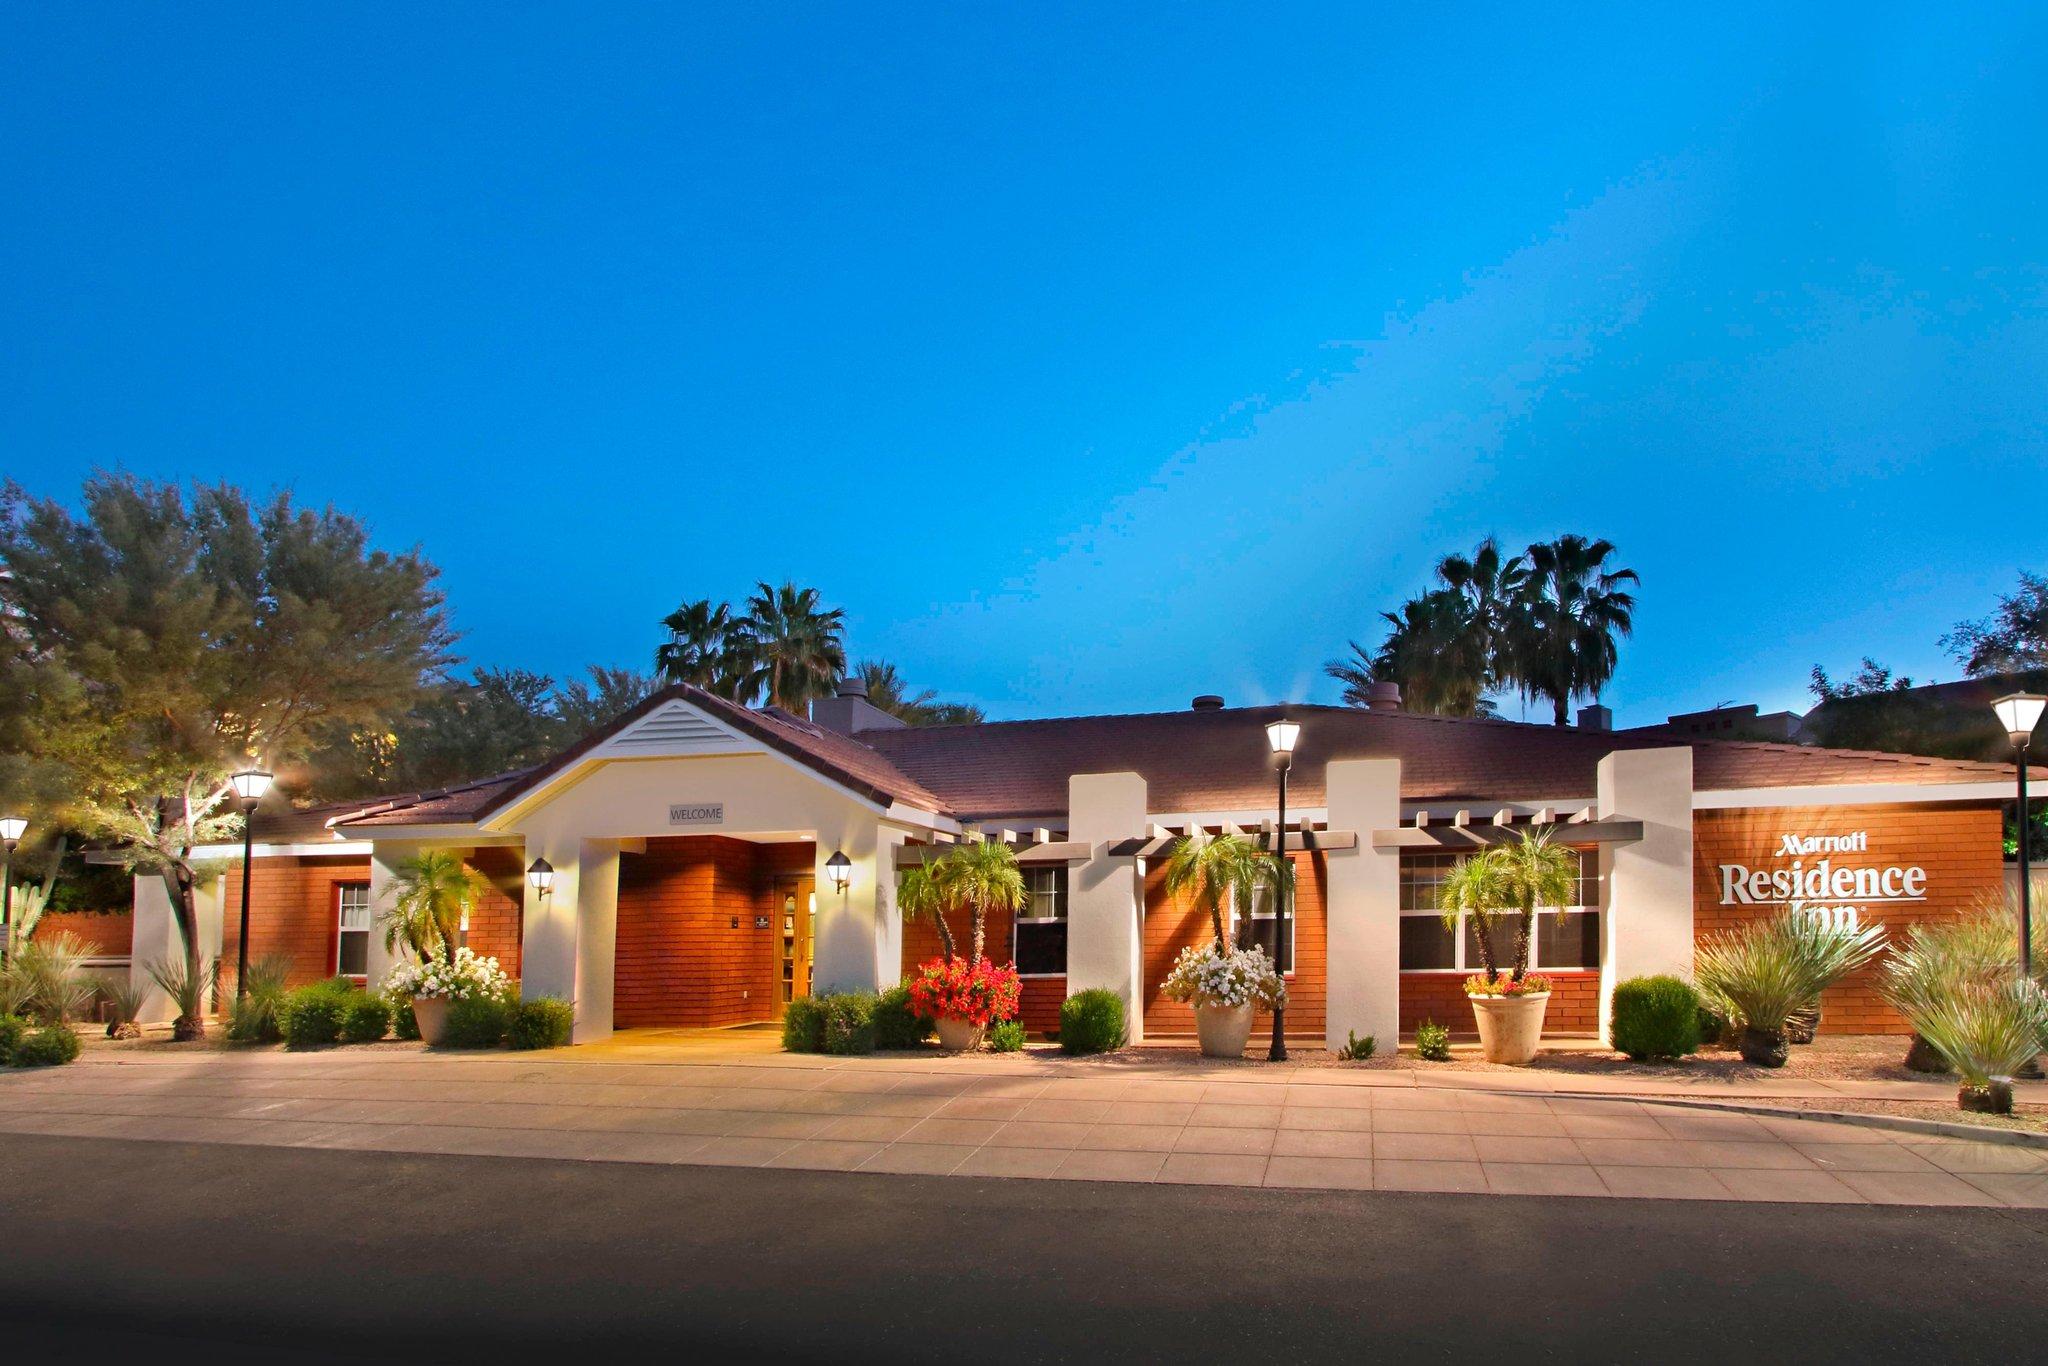 Residence Inn Scottsdale North in Scottsdale, AZ